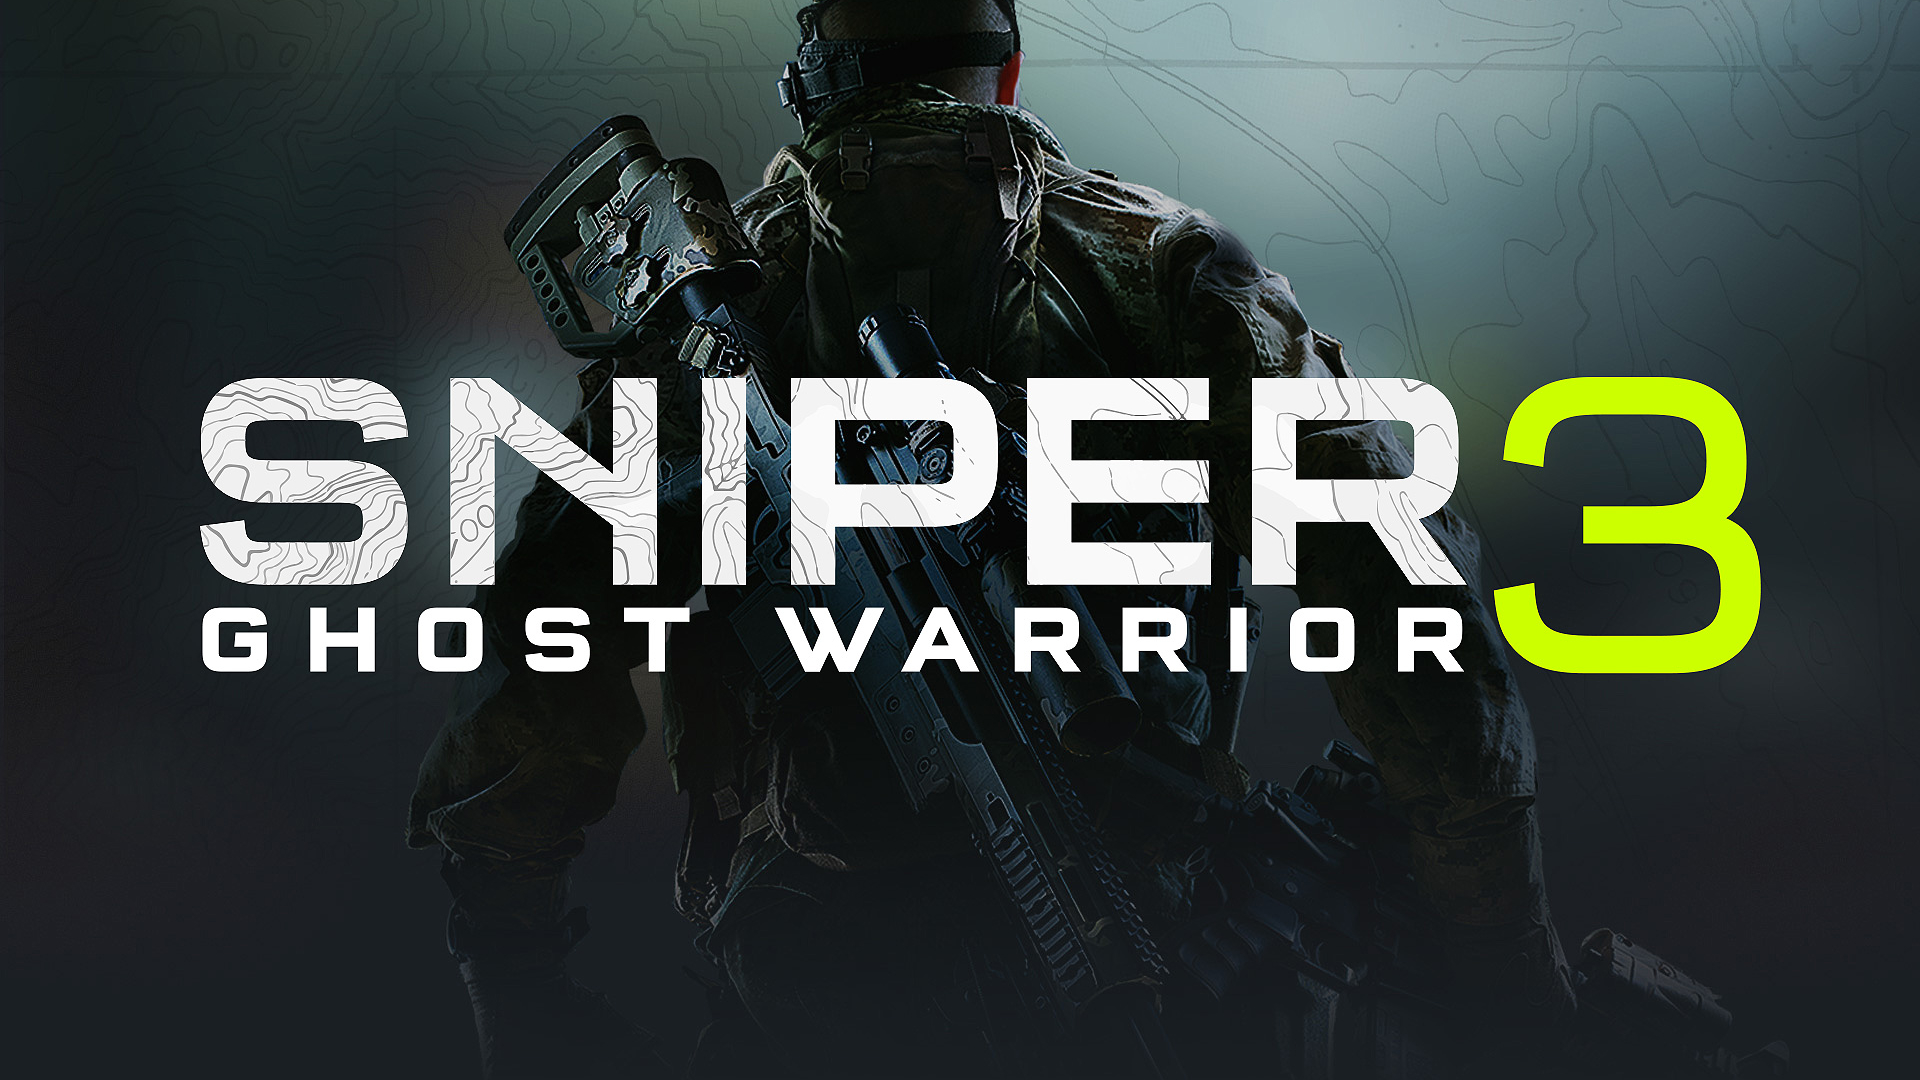 ФИНАЛ НА САМОЕ ДНО Sniper Ghost Warrior 3